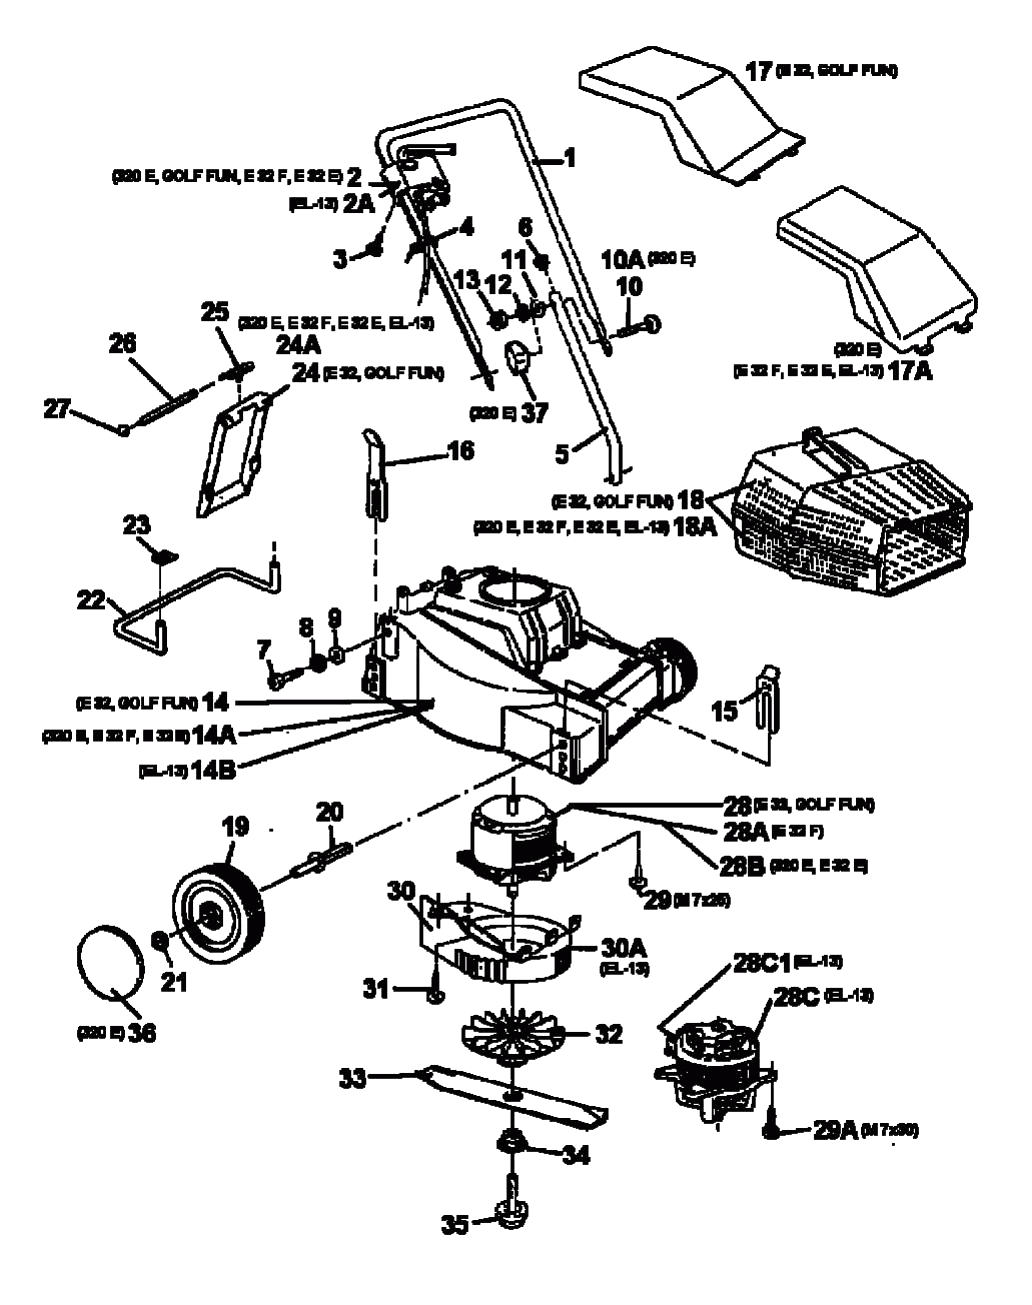 MTD Артикул 18A-A0B-678 (год выпуска 1998)